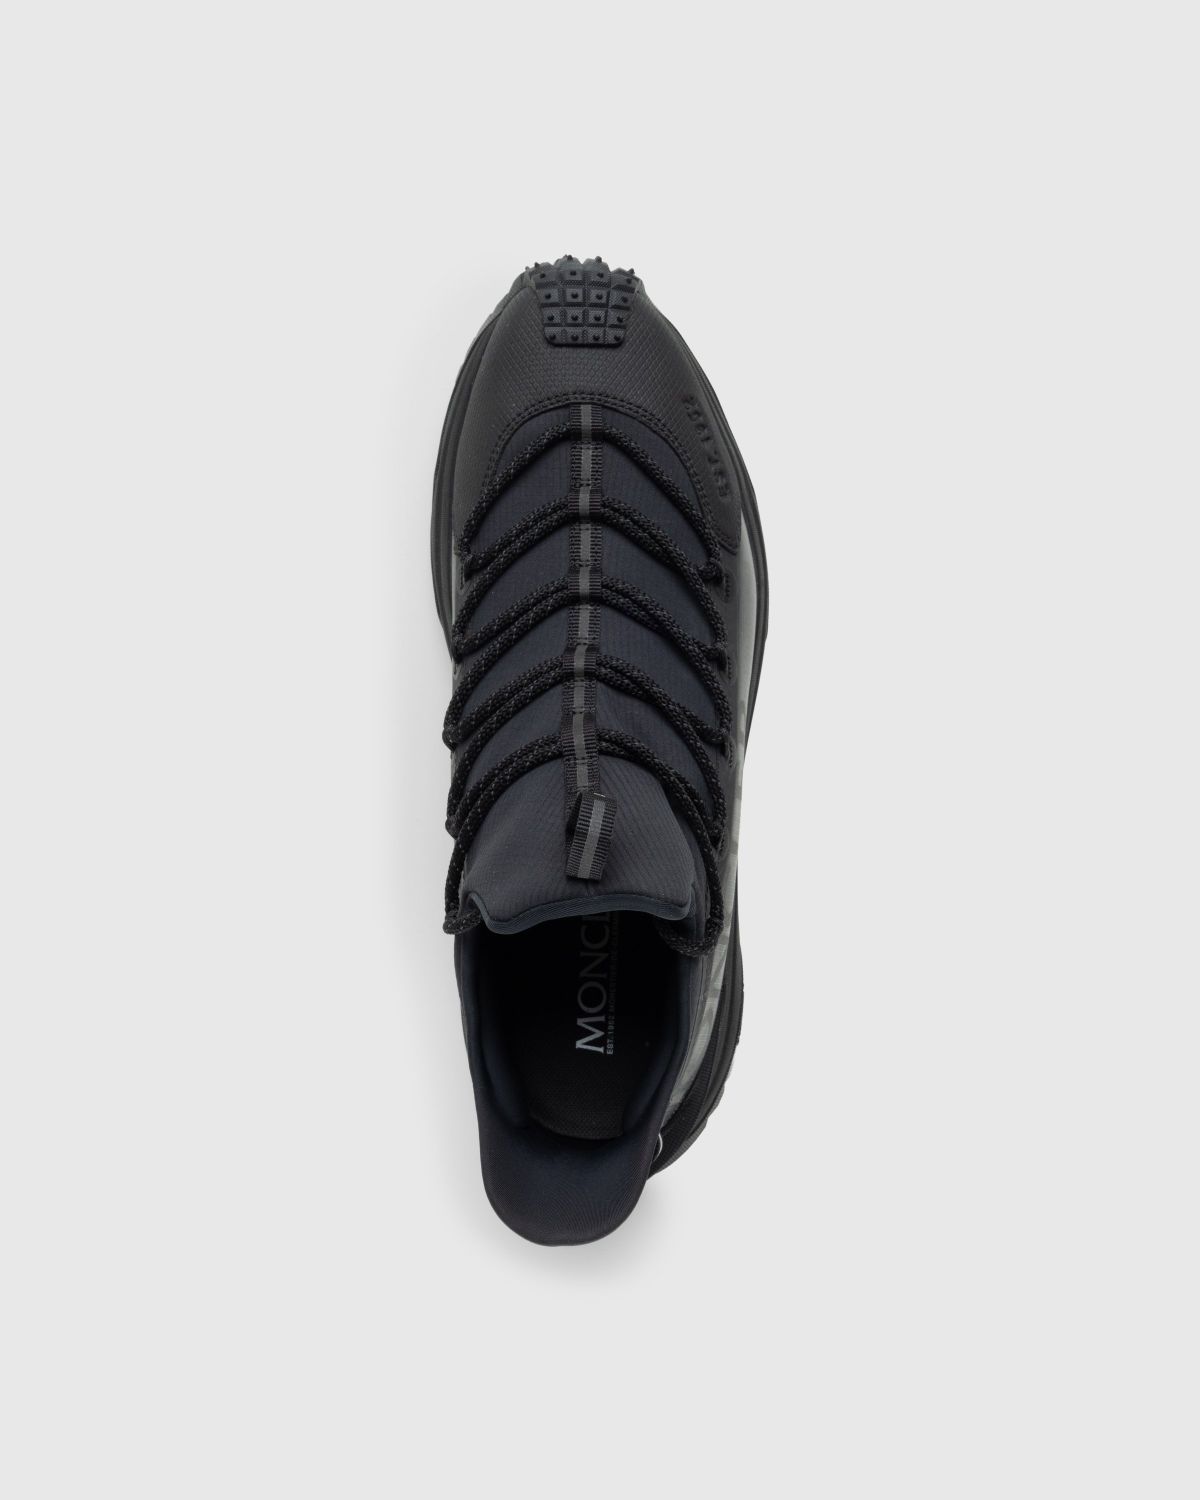 Moncler – Trailgrip Lite 2 Sneakers Black | Highsnobiety Shop